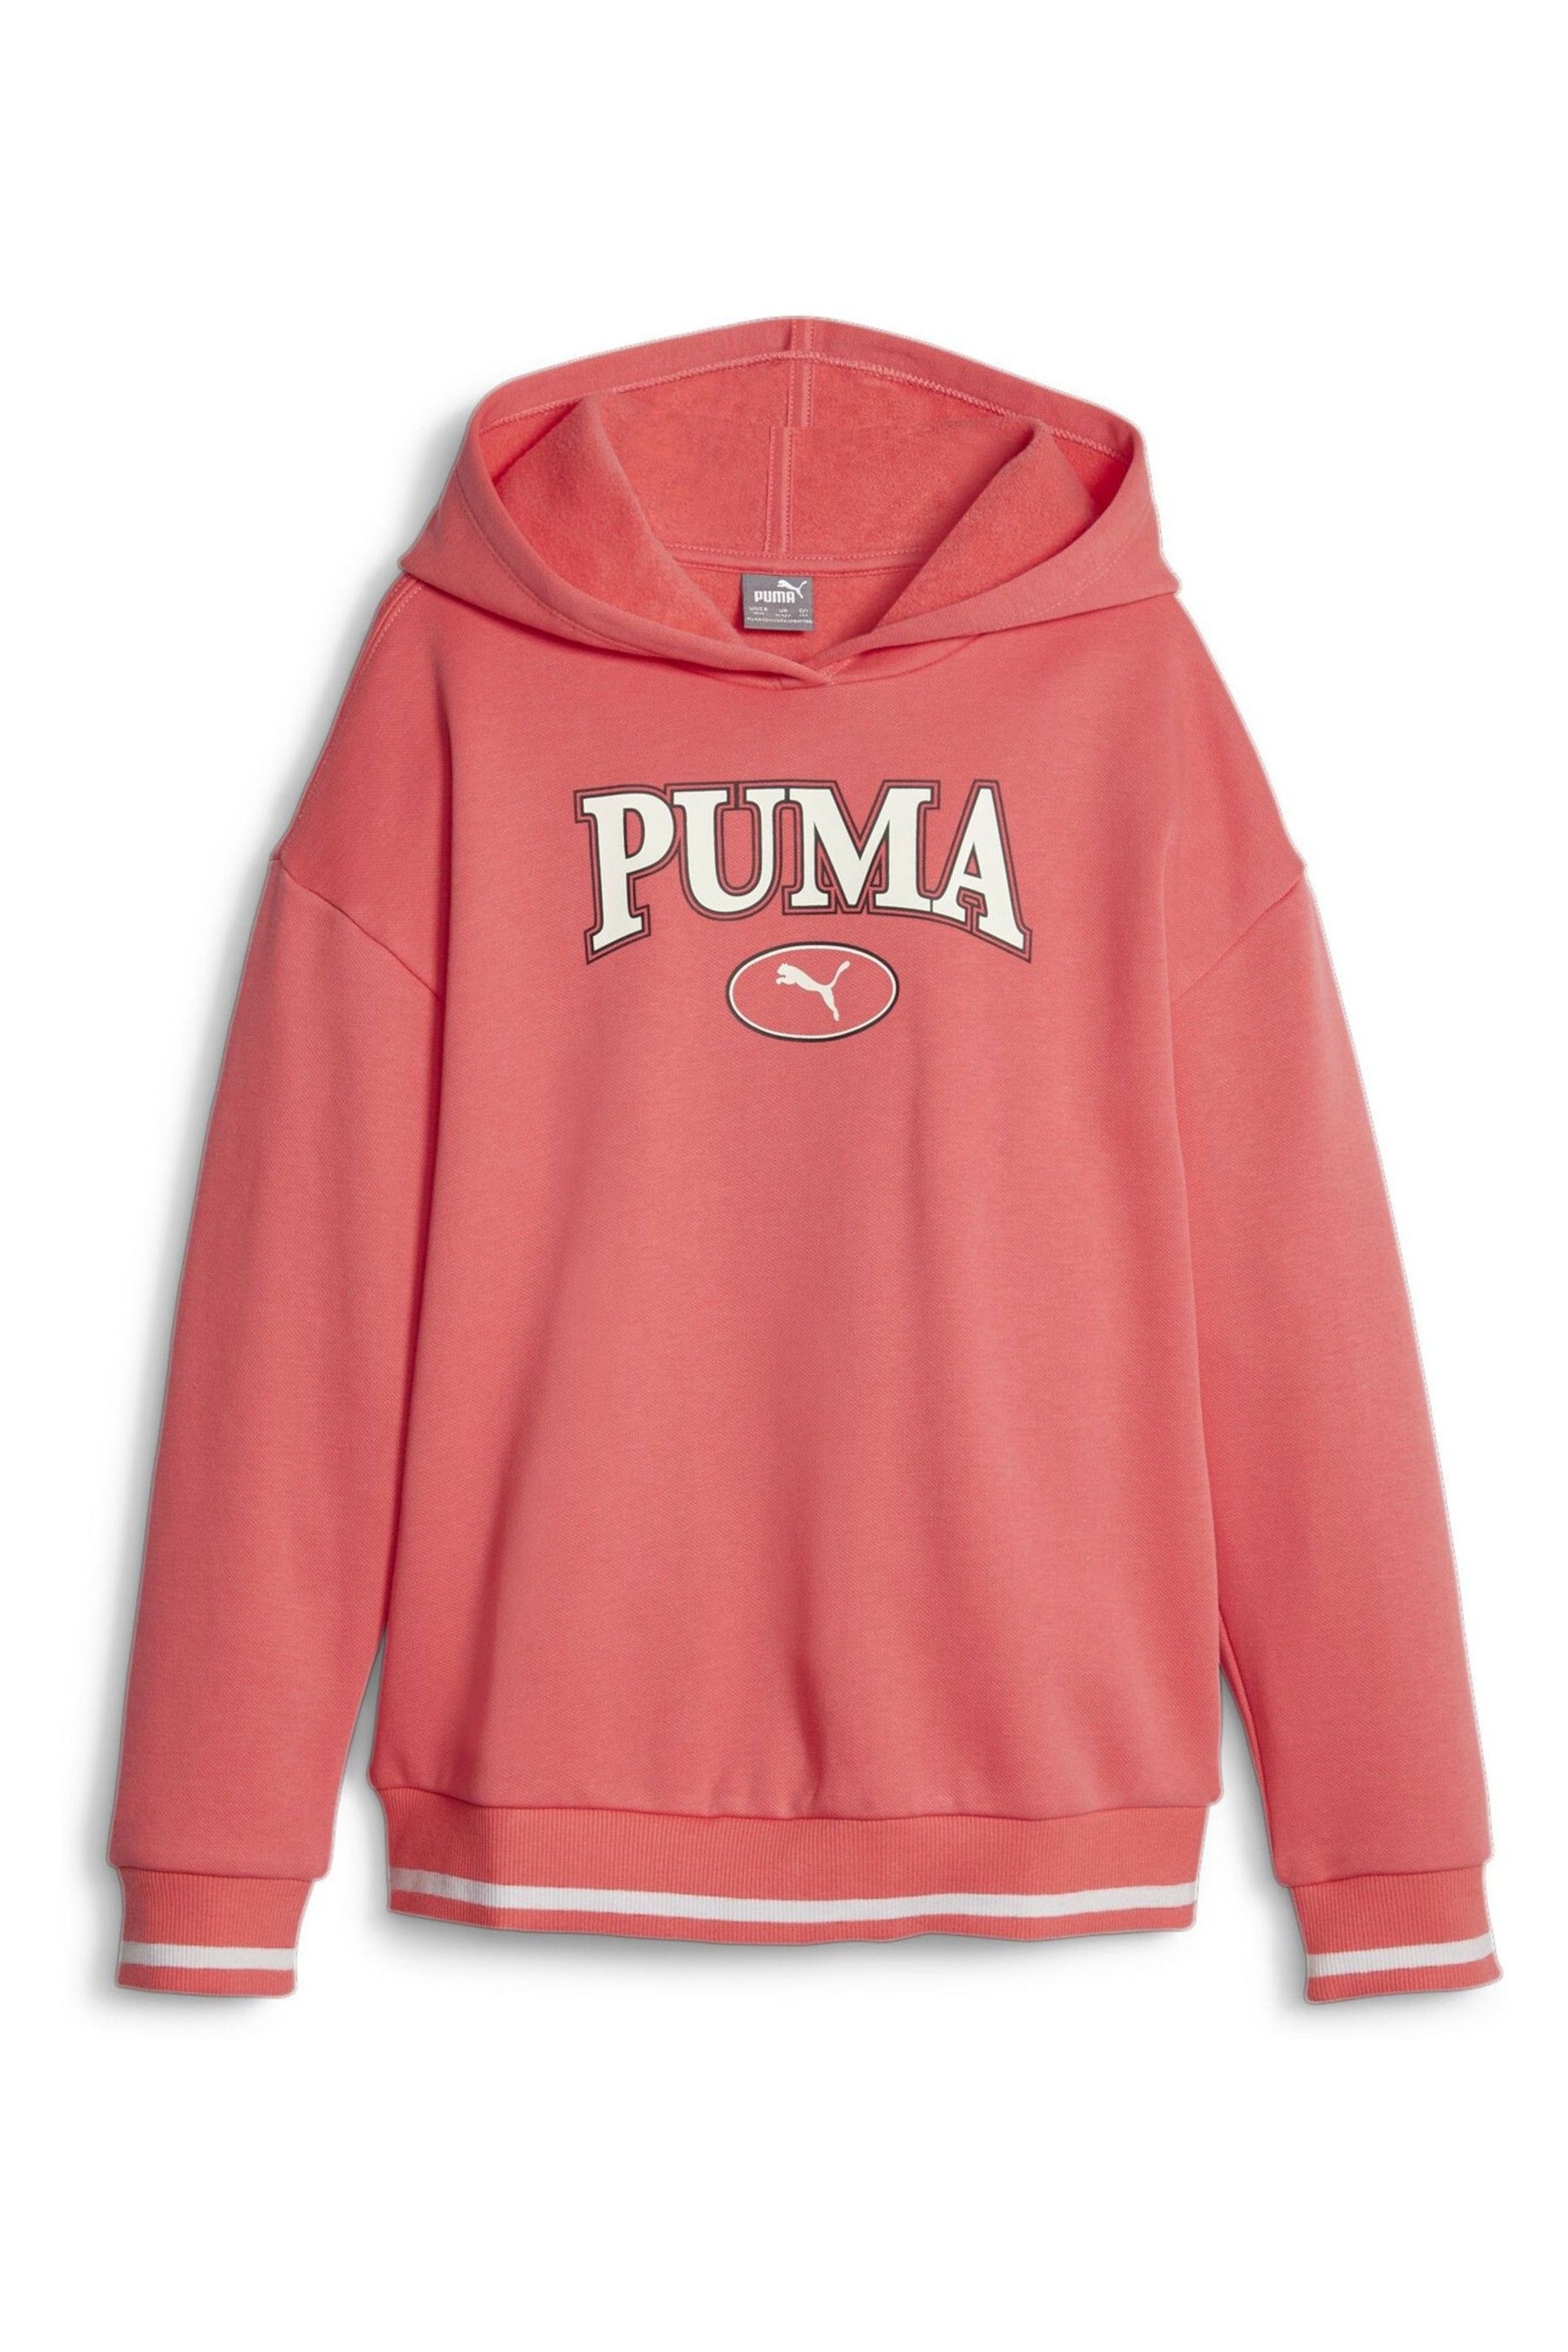 Puma Pink Youth Hoodie - Image 4 of 5